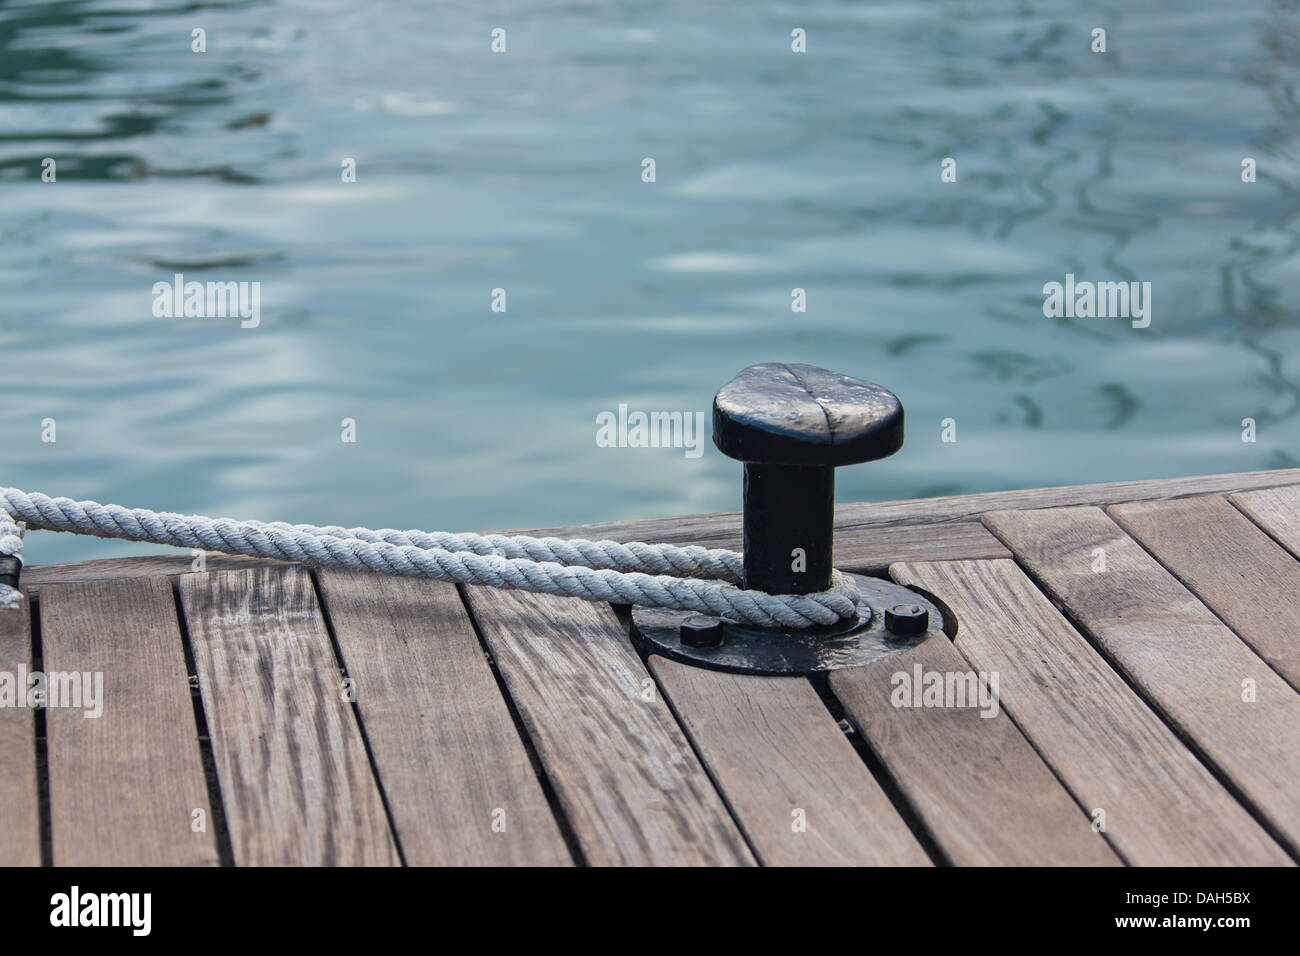 Mooring rope tied around steel anchor Stock Photo